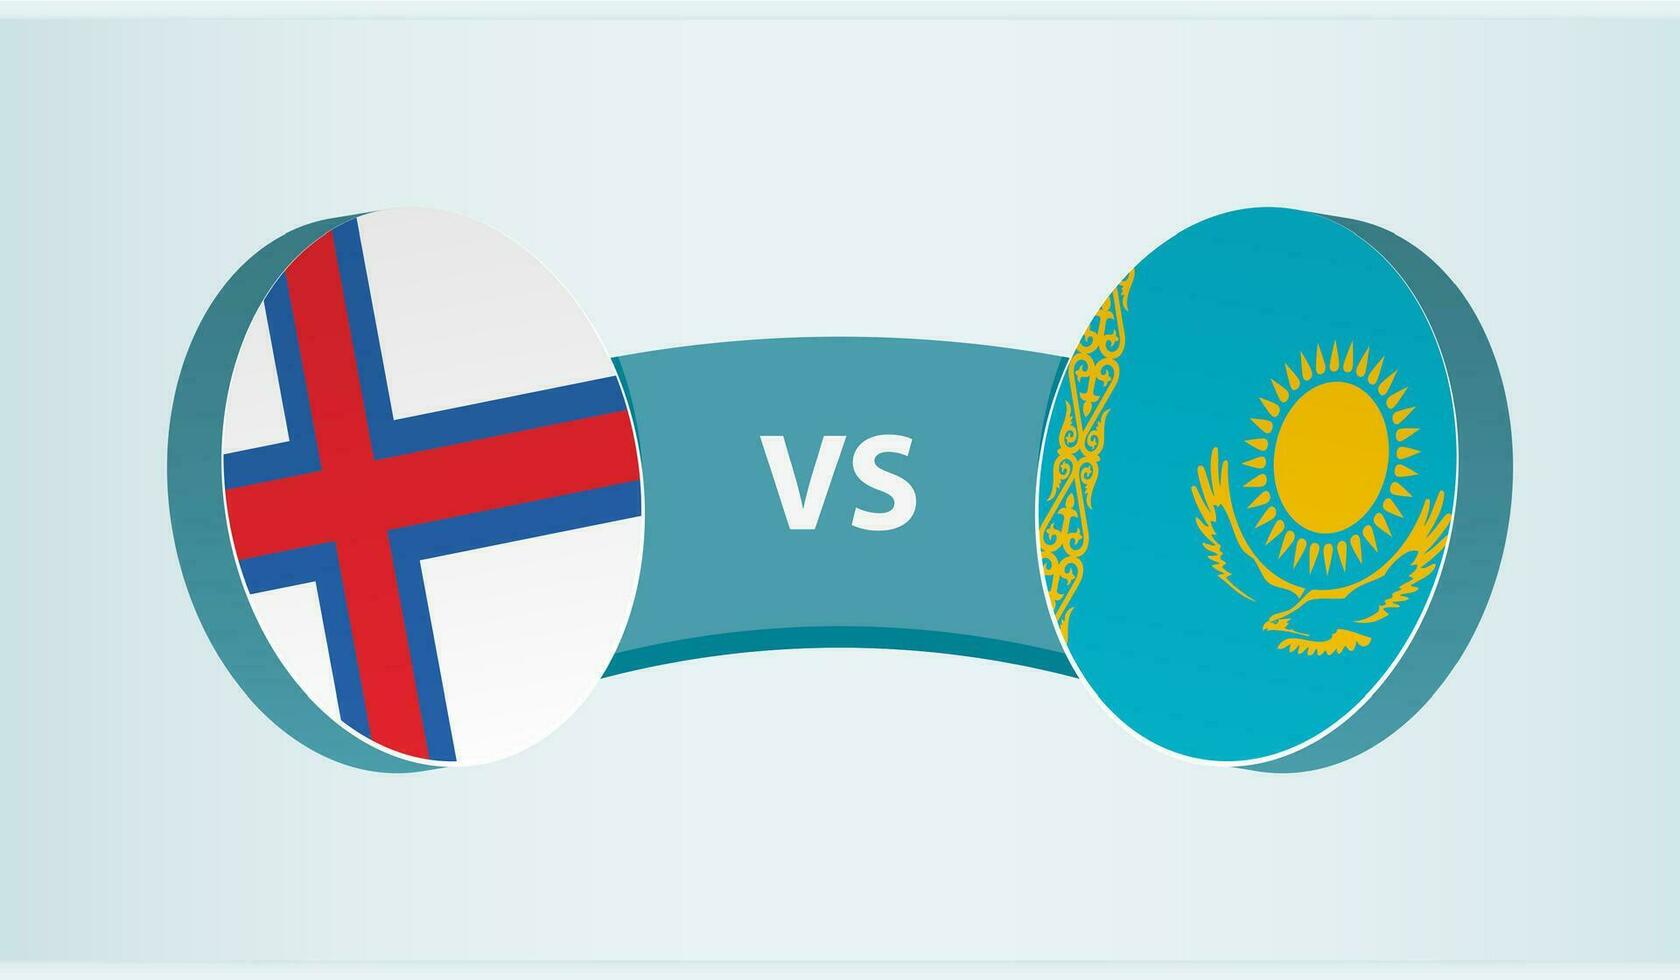 Faroe Islands versus Kazakhstan, team sports competition concept. vector